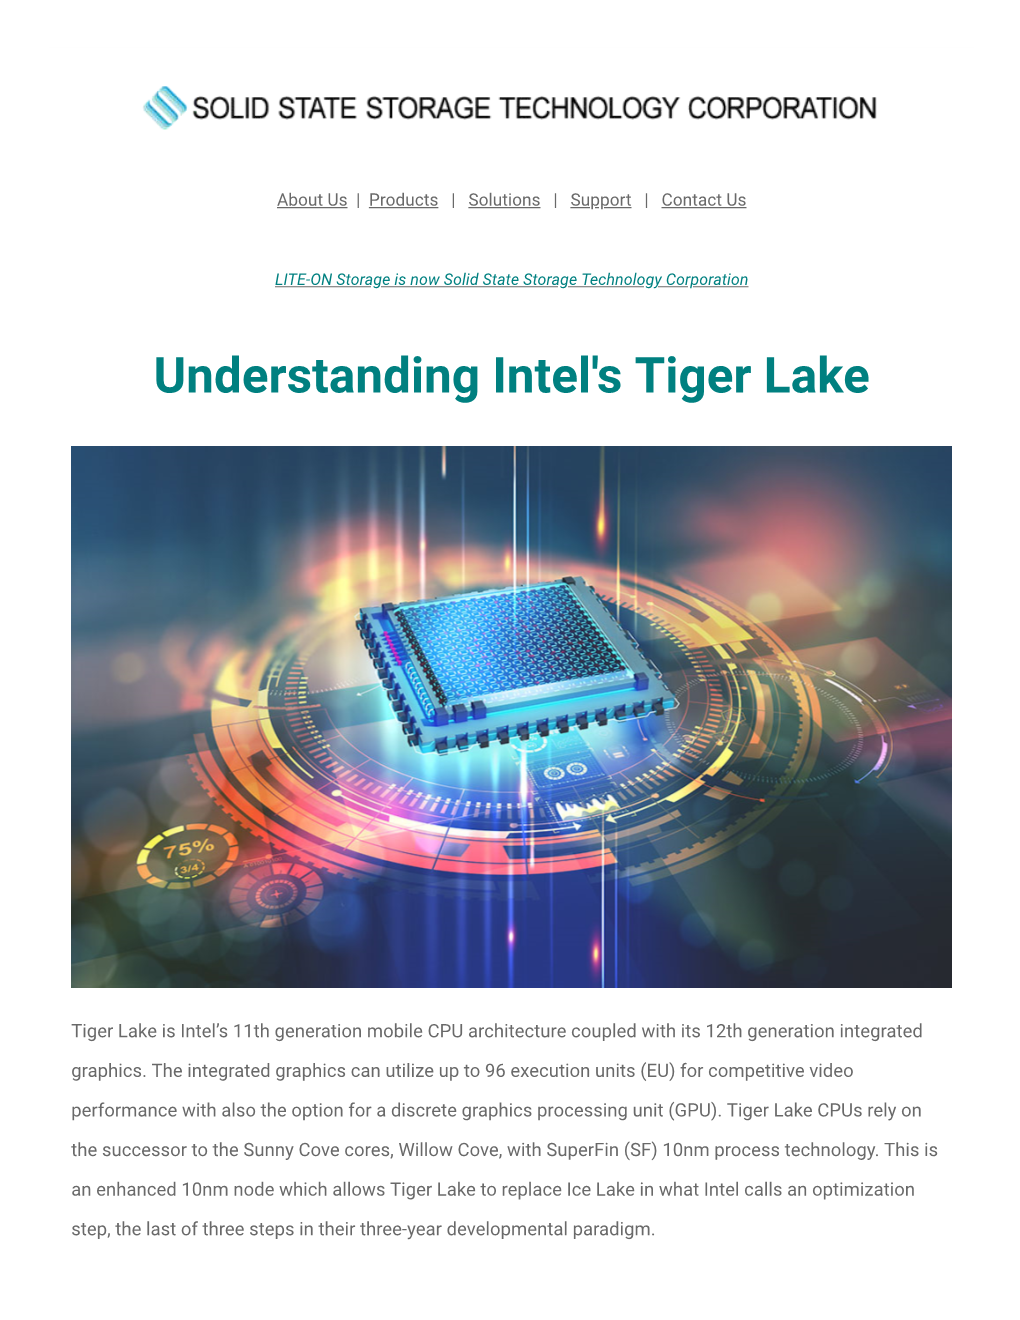 Understanding Intel's Tiger Lake